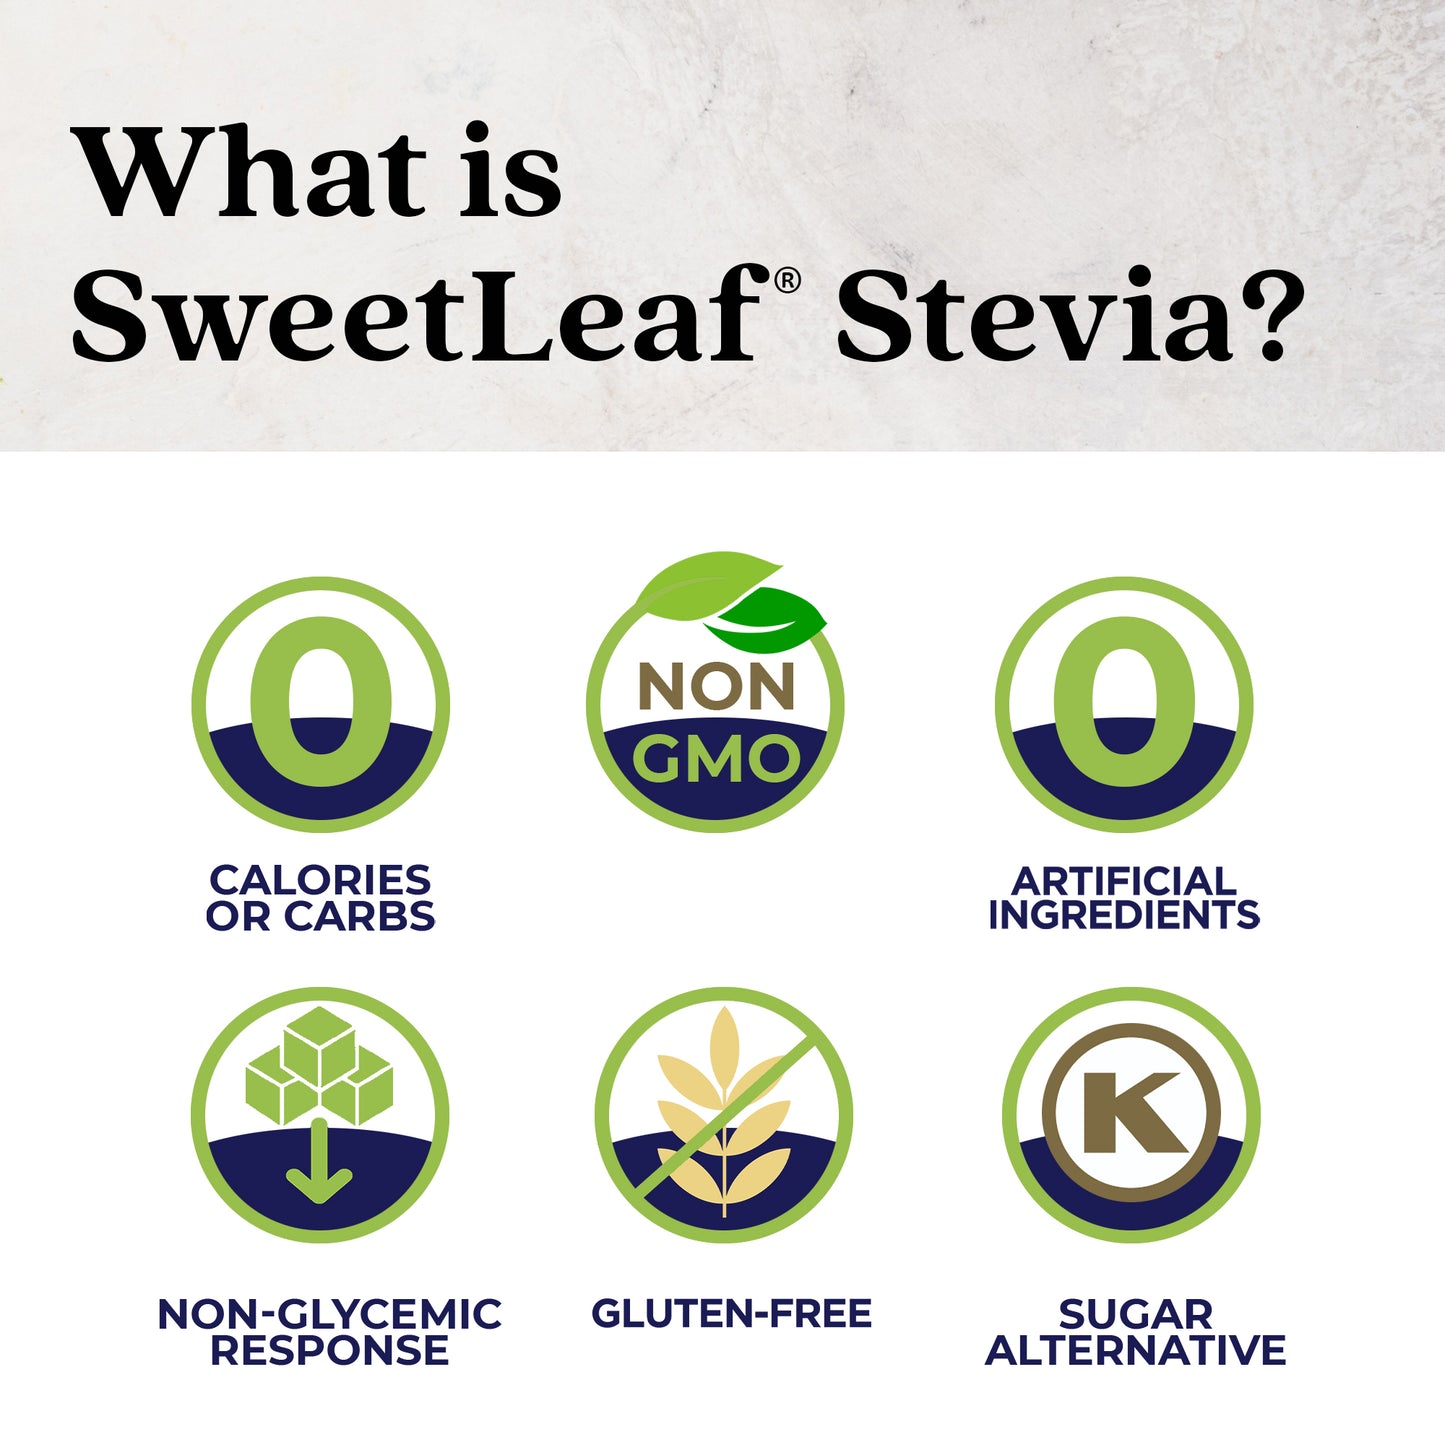 Sugar-Free Stevia Syrup, Maple, 12 servings